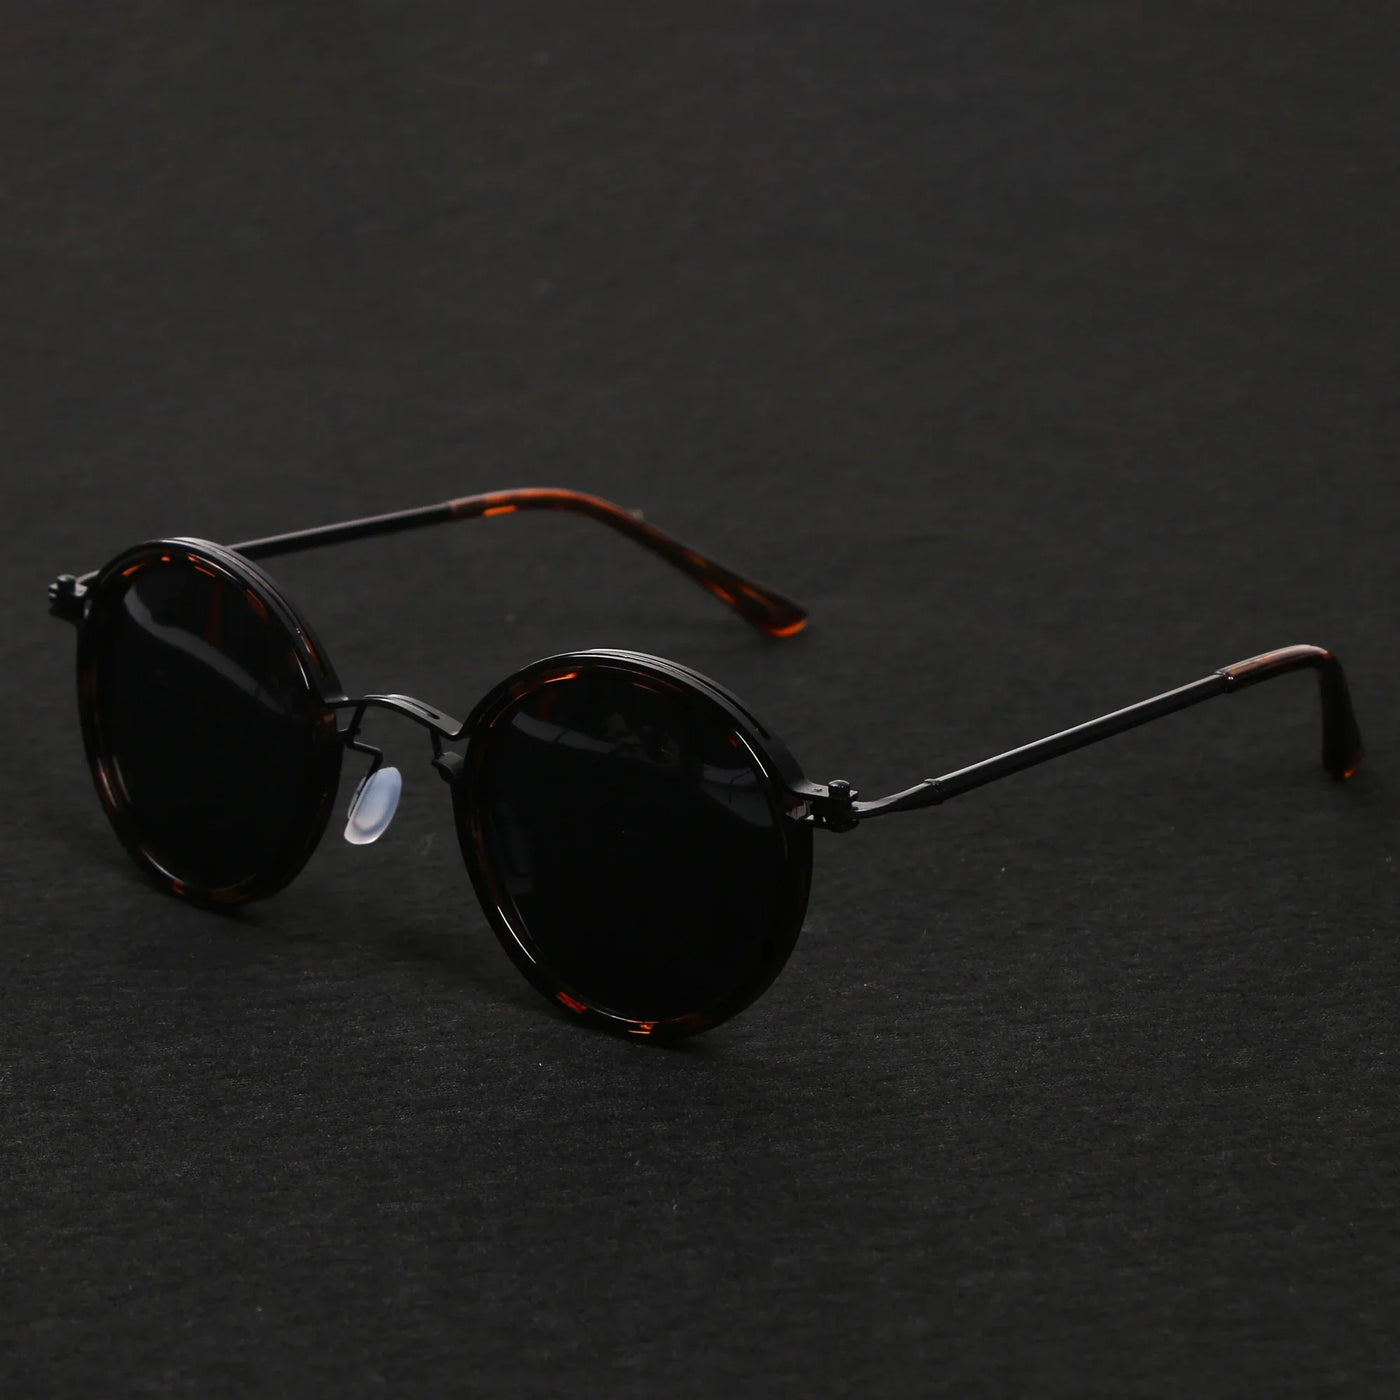 Downtown Classic Sunglasses